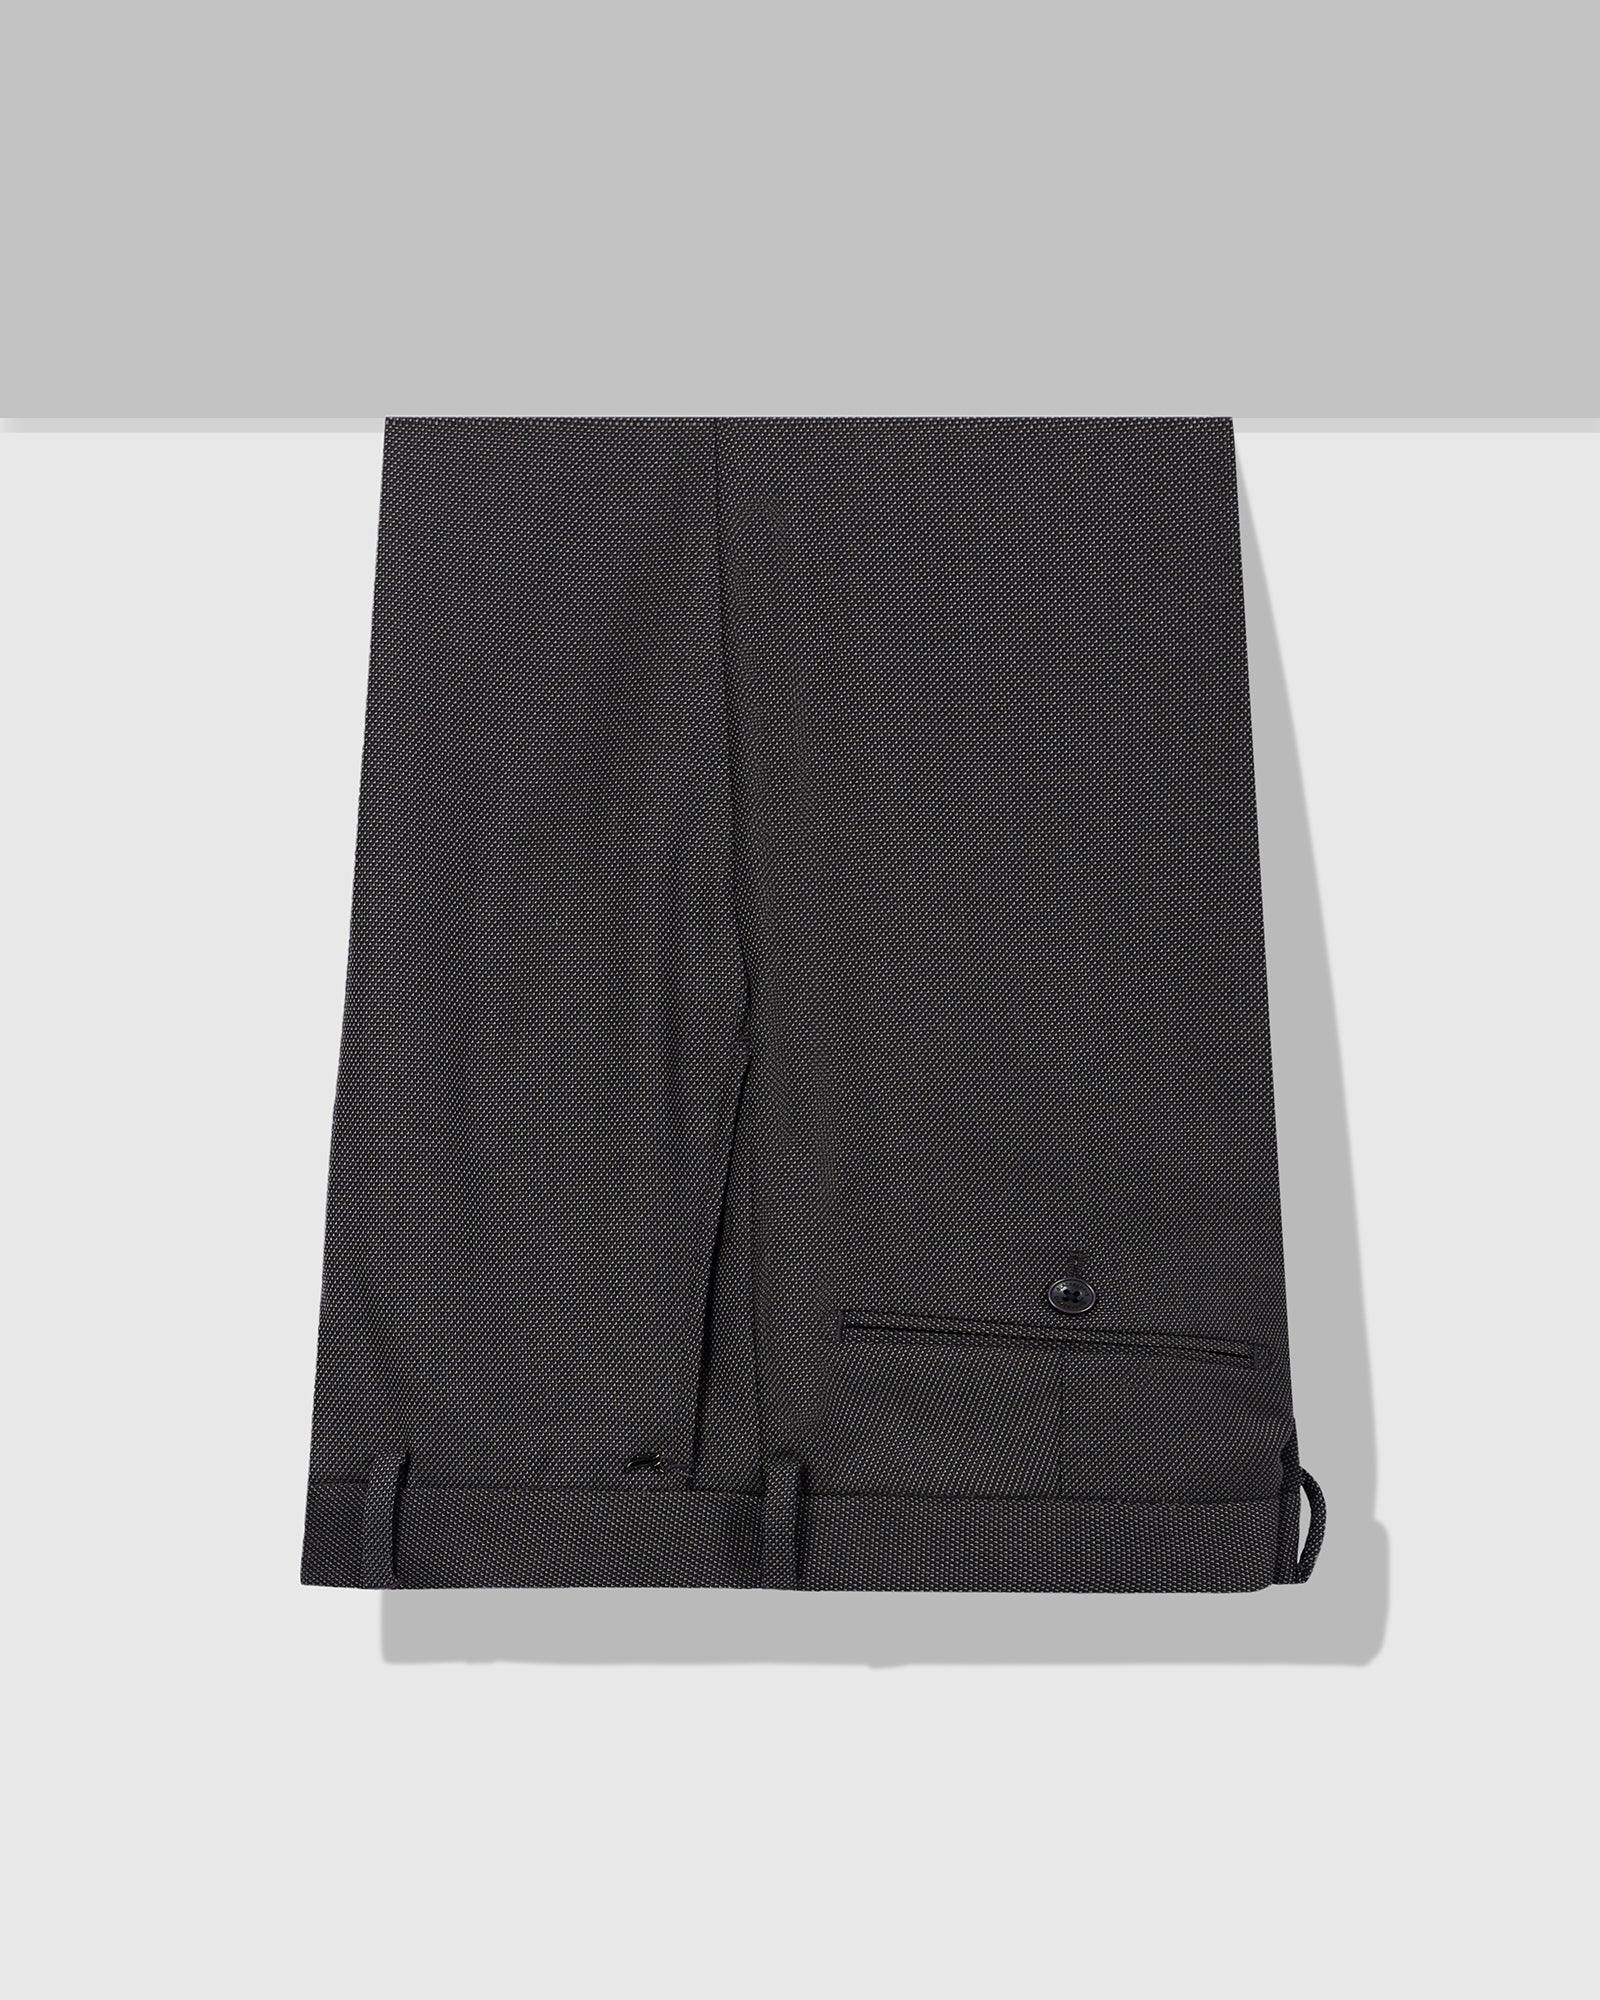 Slim Comfort B-95 Formal Charcoal Textured Trouser - Mario